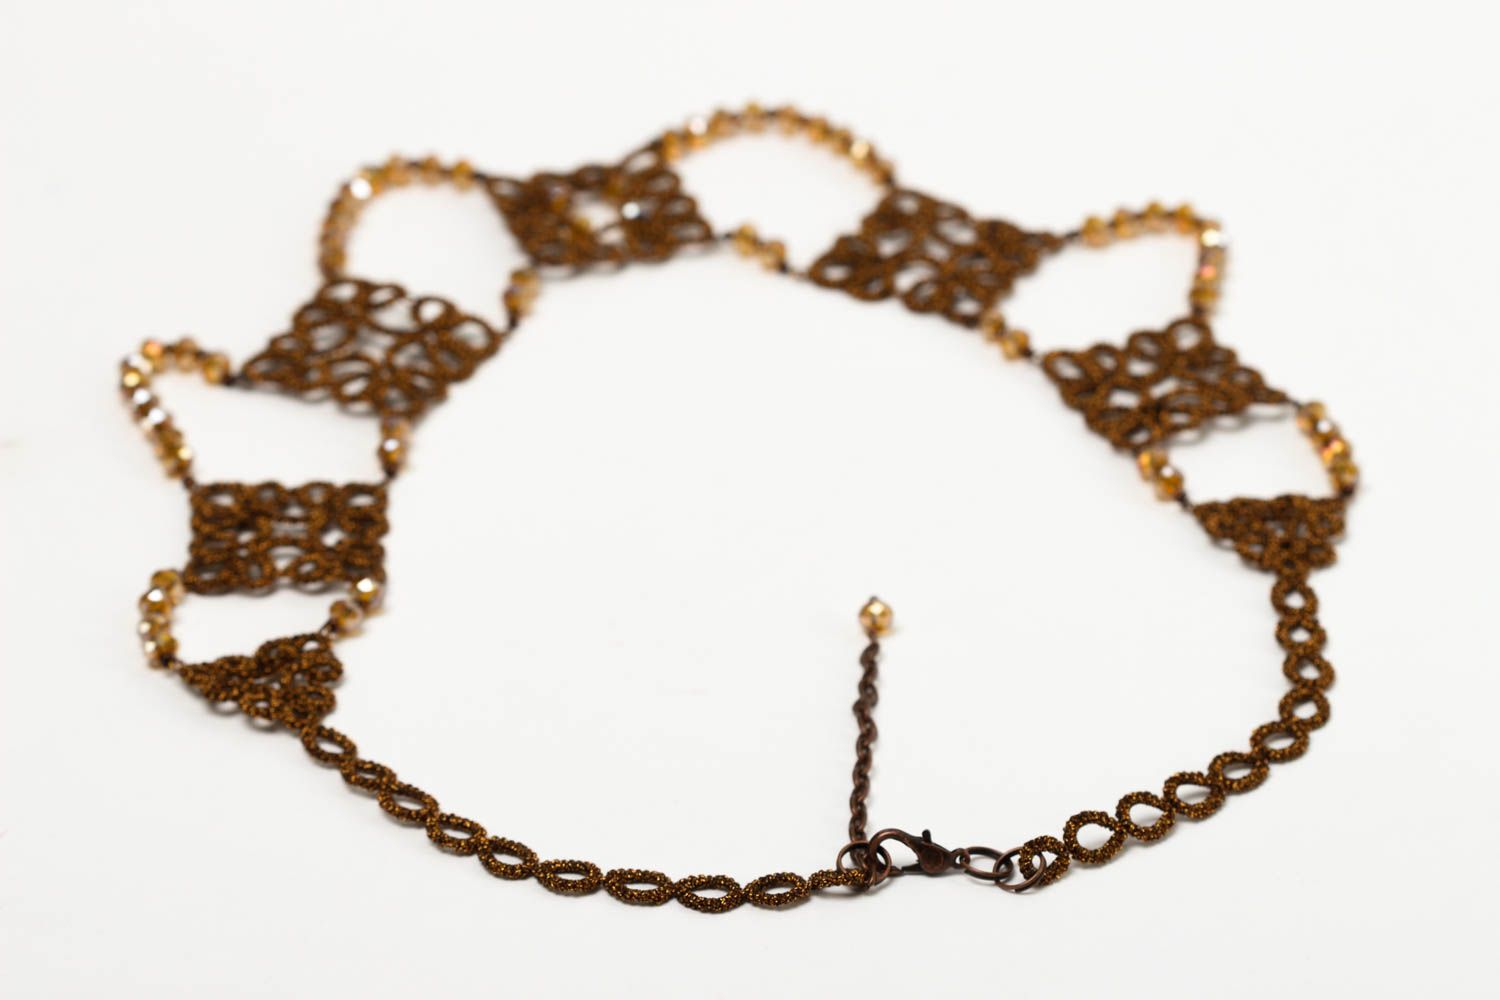 Unusual handmade textile necklace artisan jewelry designs neck accessories photo 4